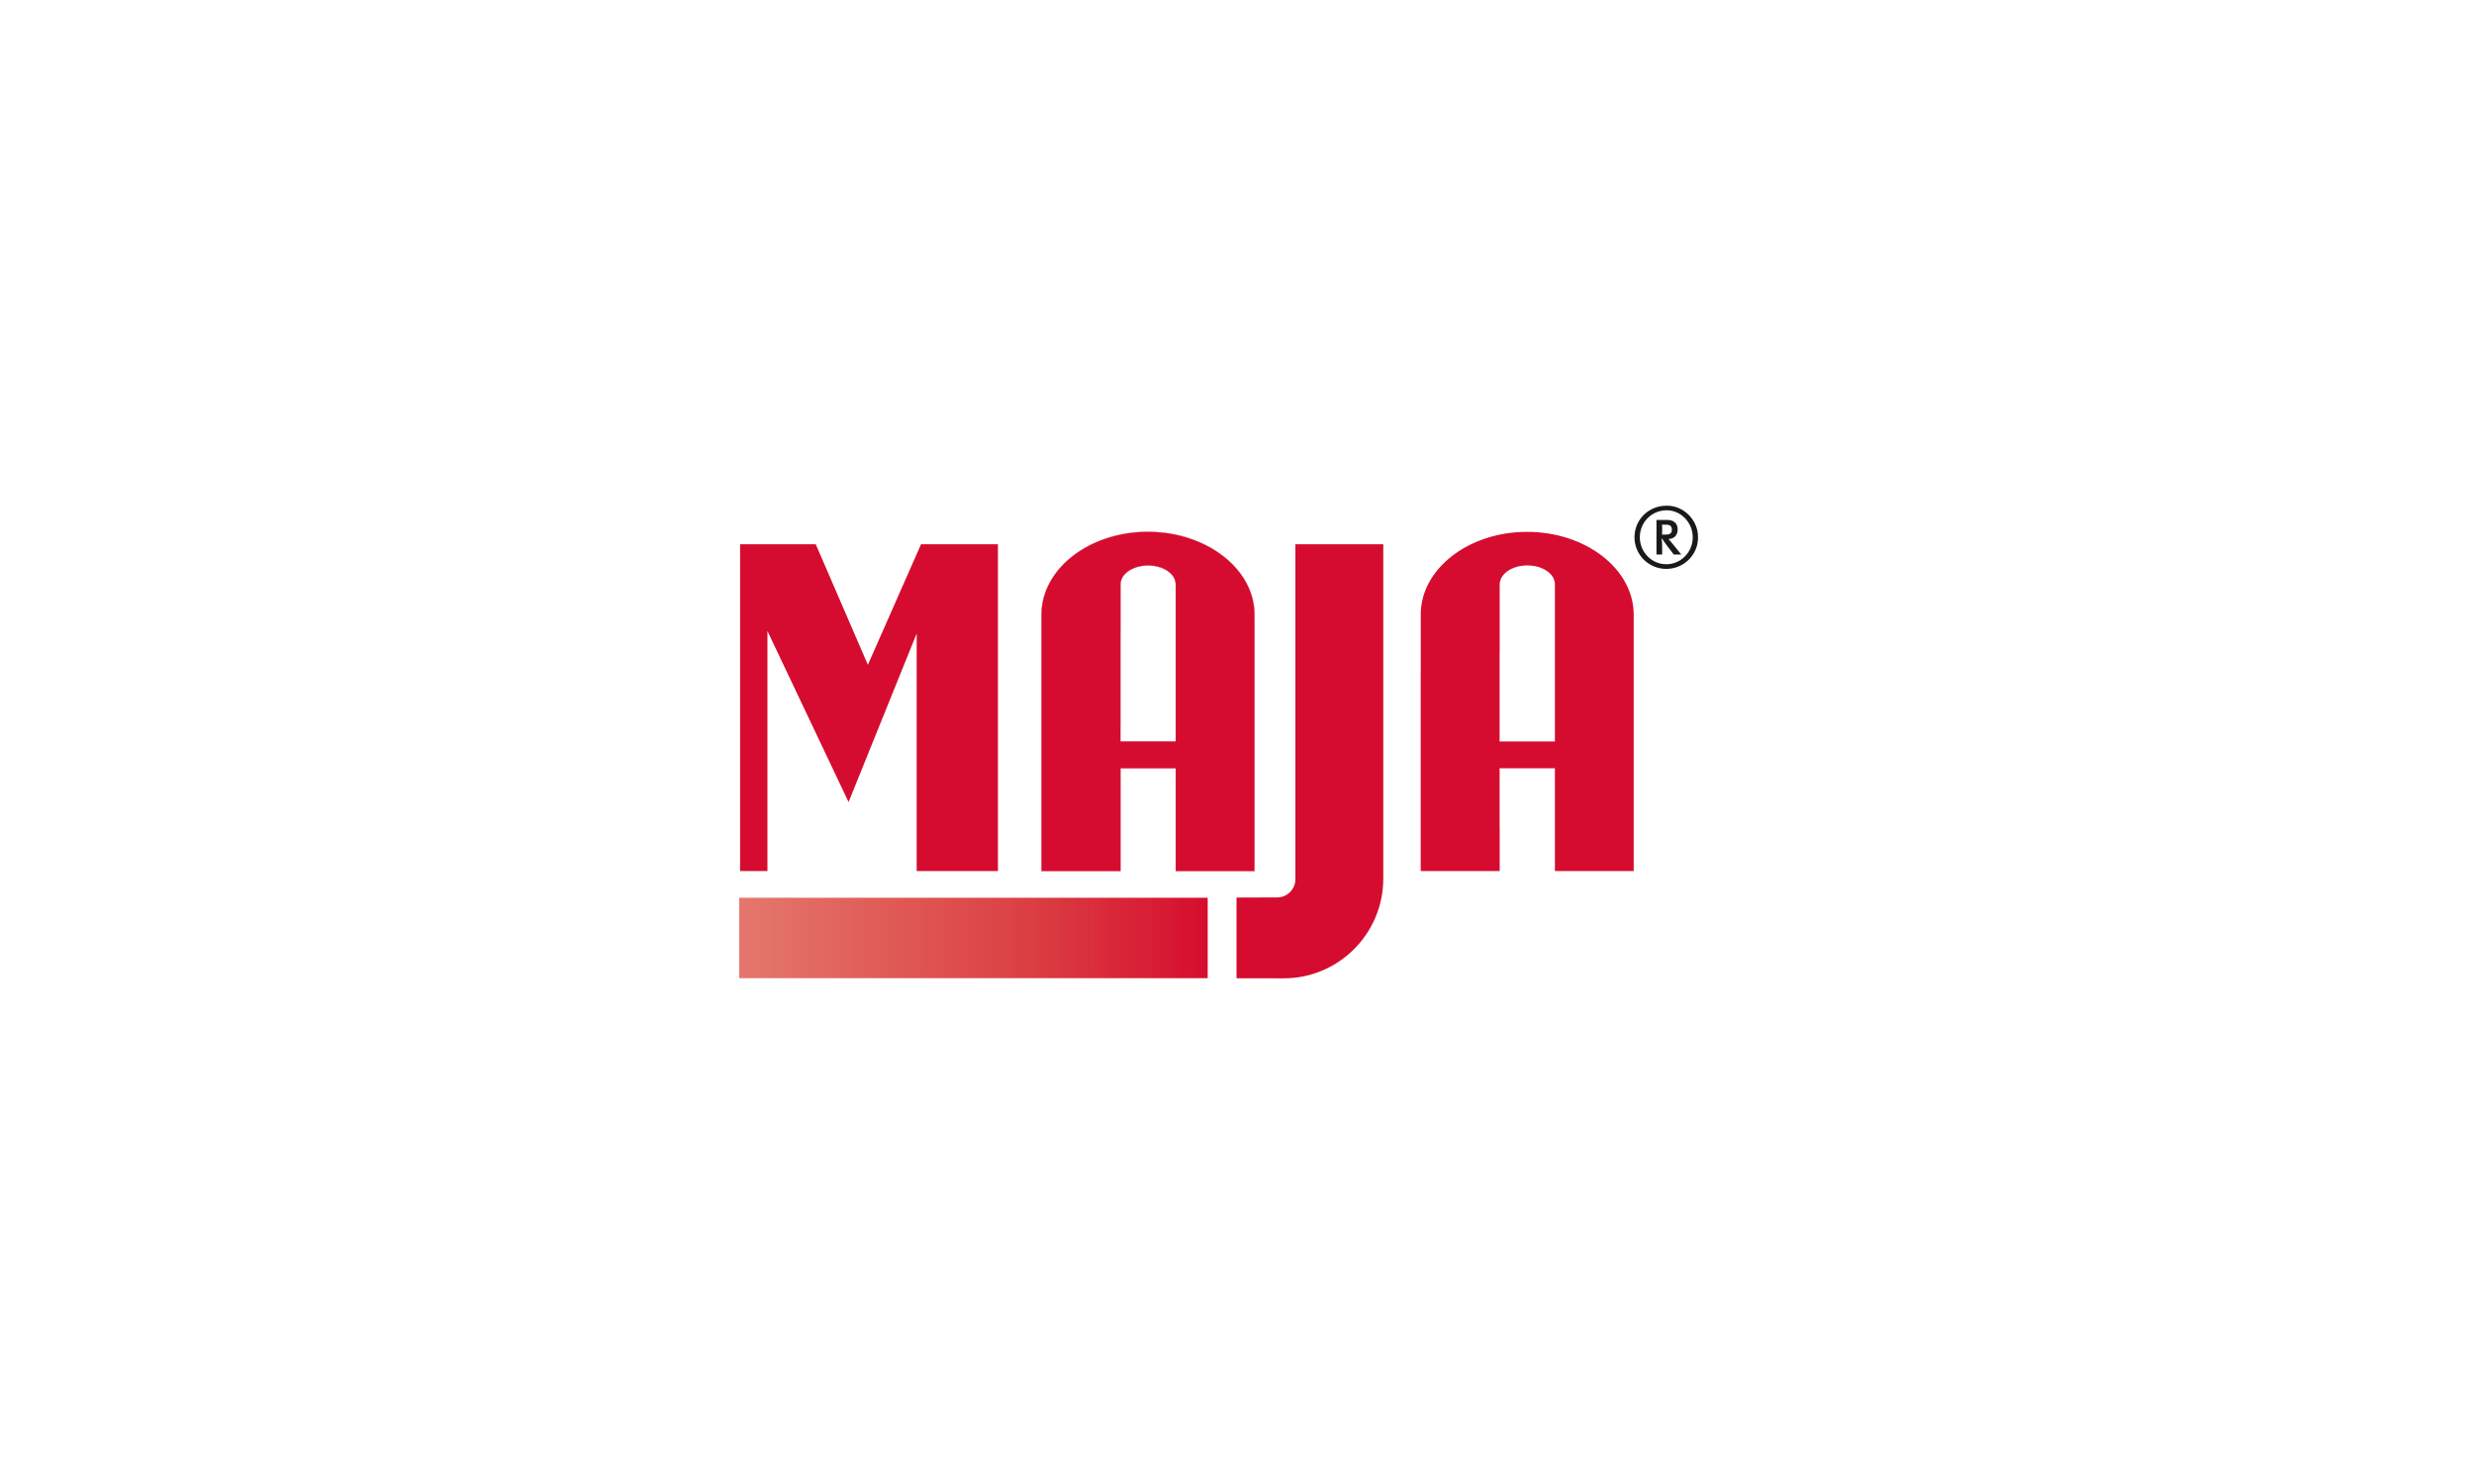 Marel agrees to acquire MAJA